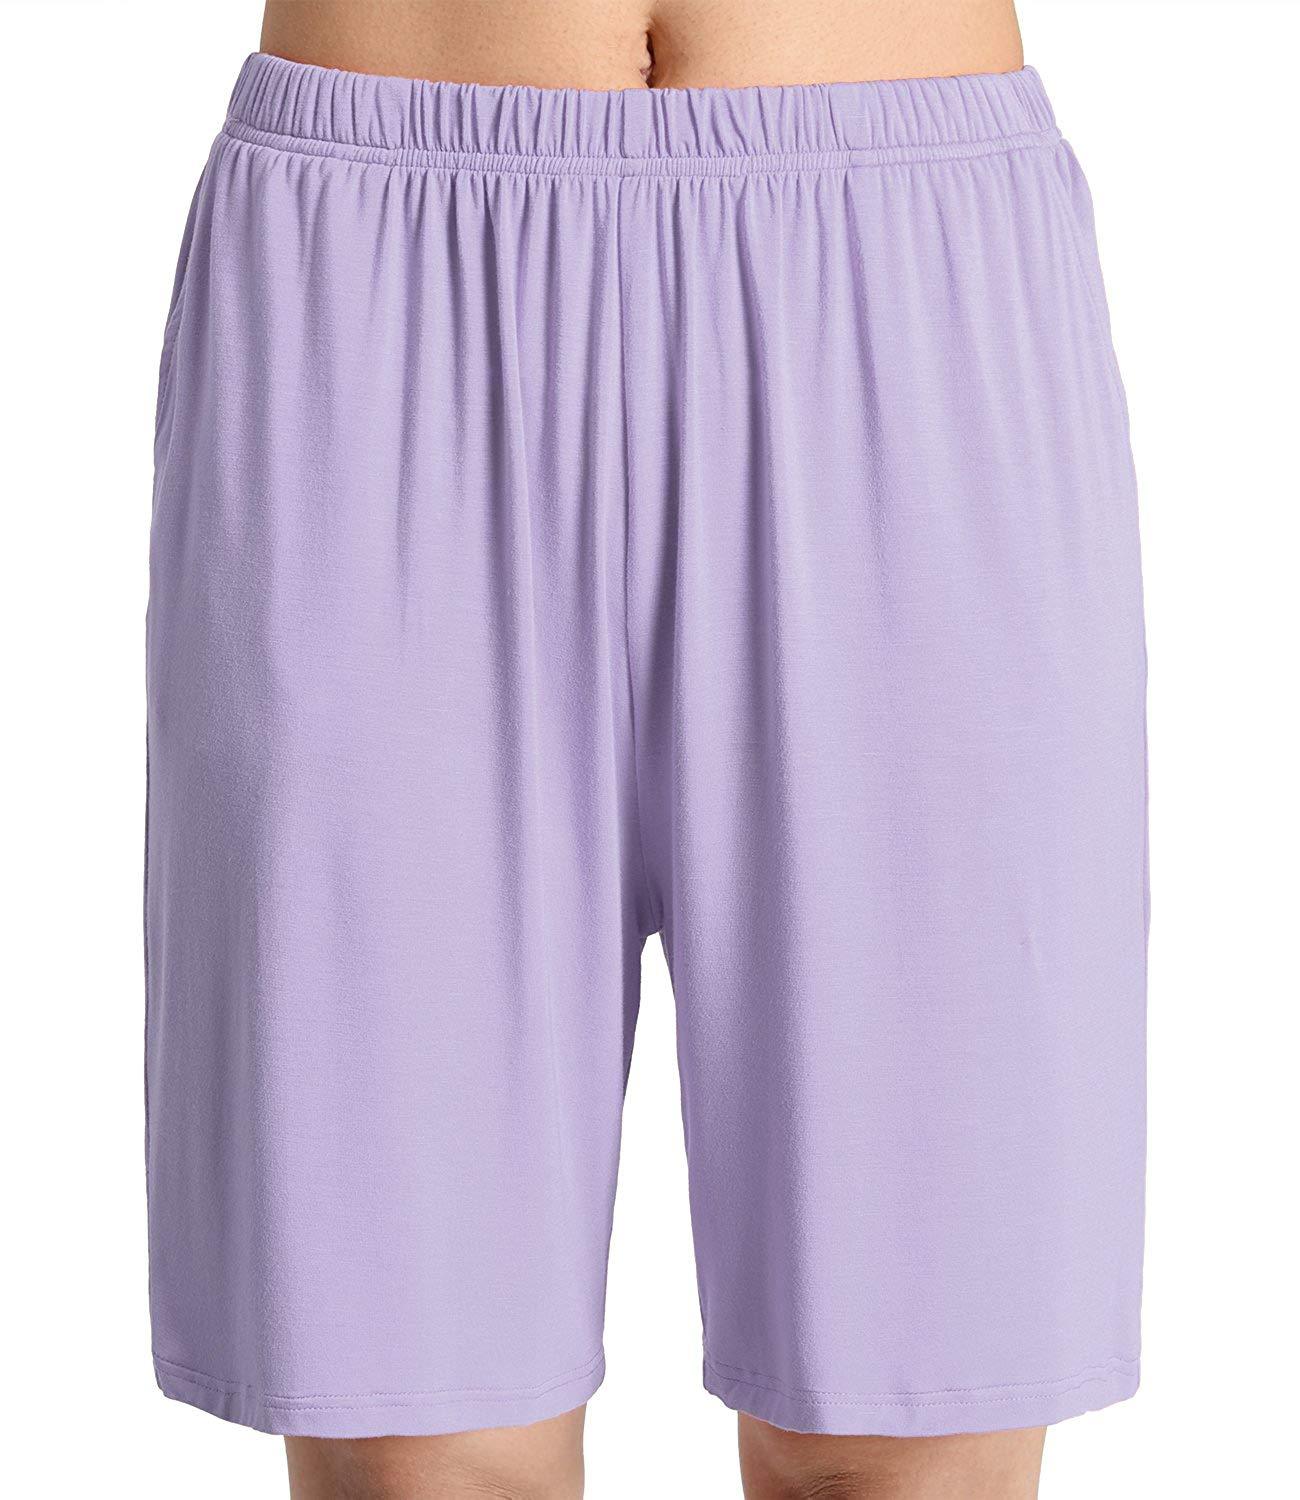 Latuza Women's Sleepwear Cotton Plaid Pajama Boxer Shorts XL Pink at   Women's Clothing store